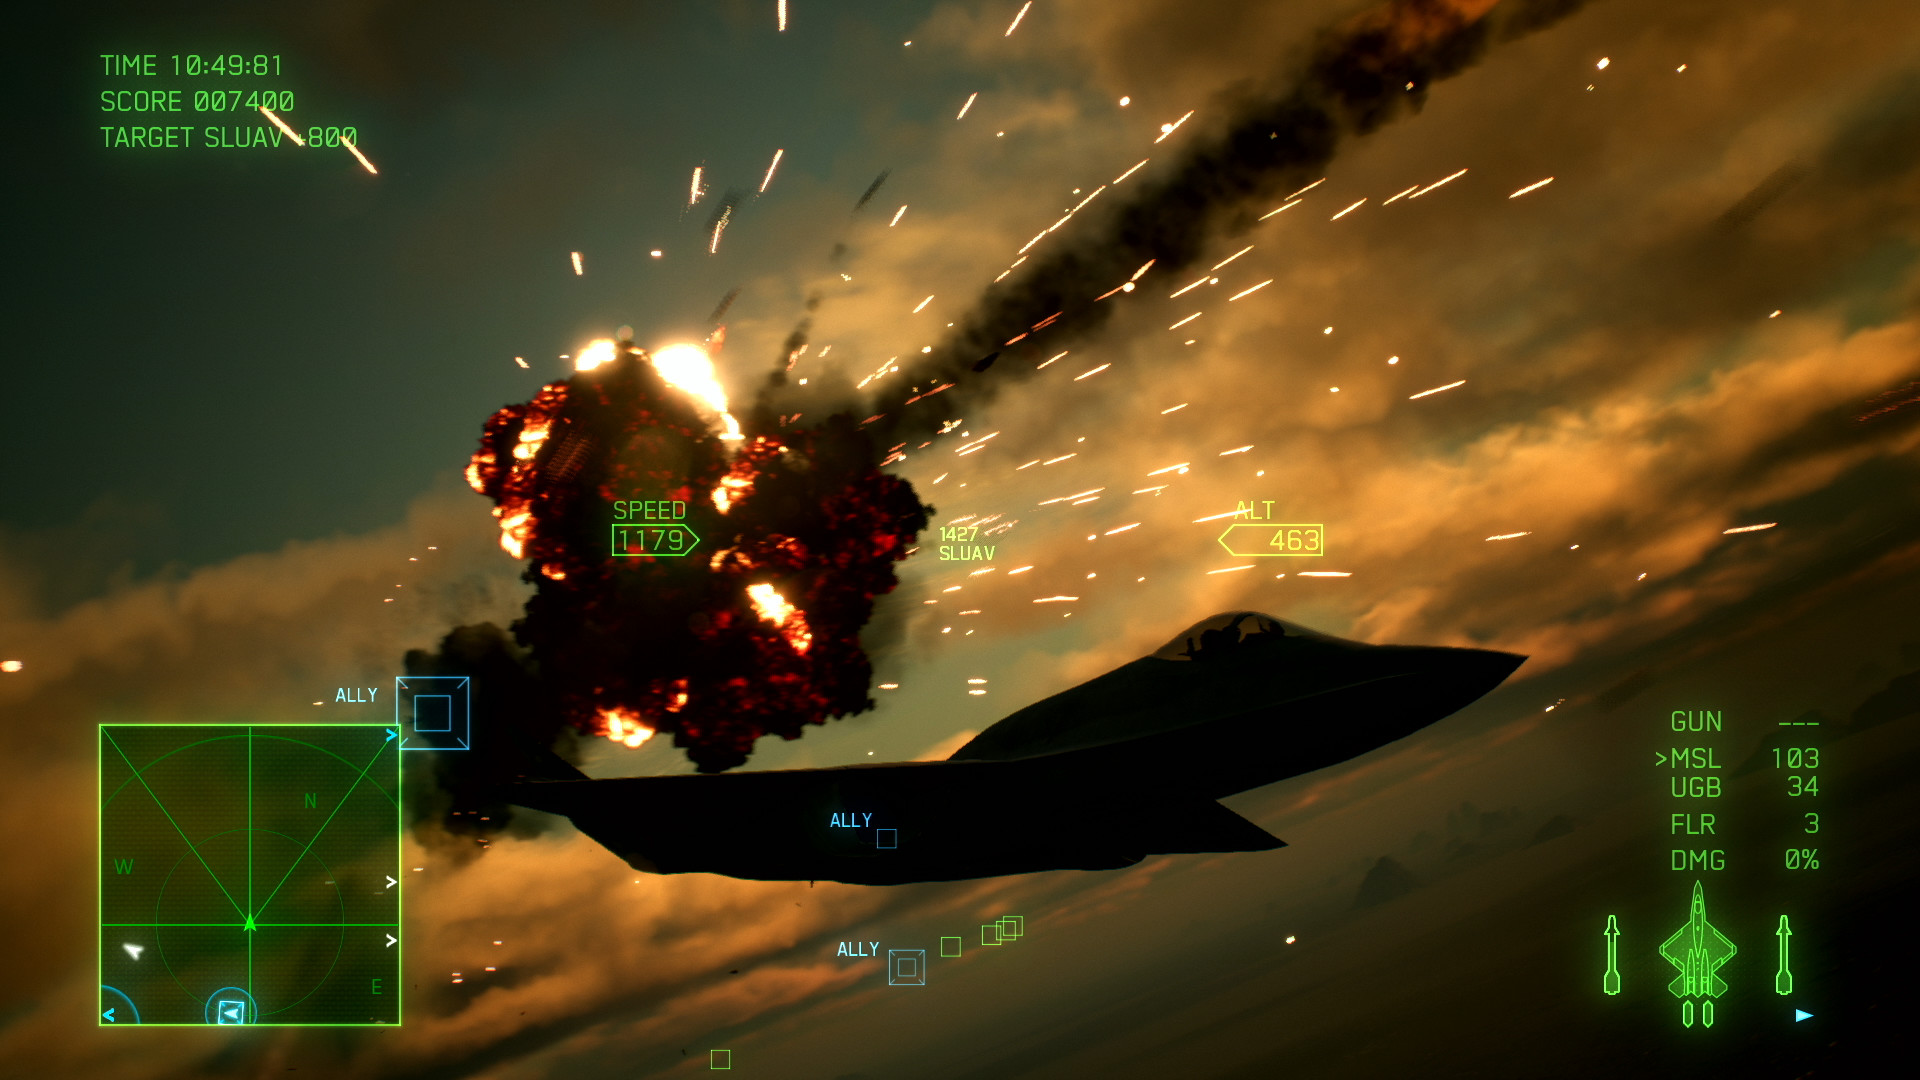 Ace Combat 7 video details upcoming DLC Ten Million Relief Plan –  Destructoid